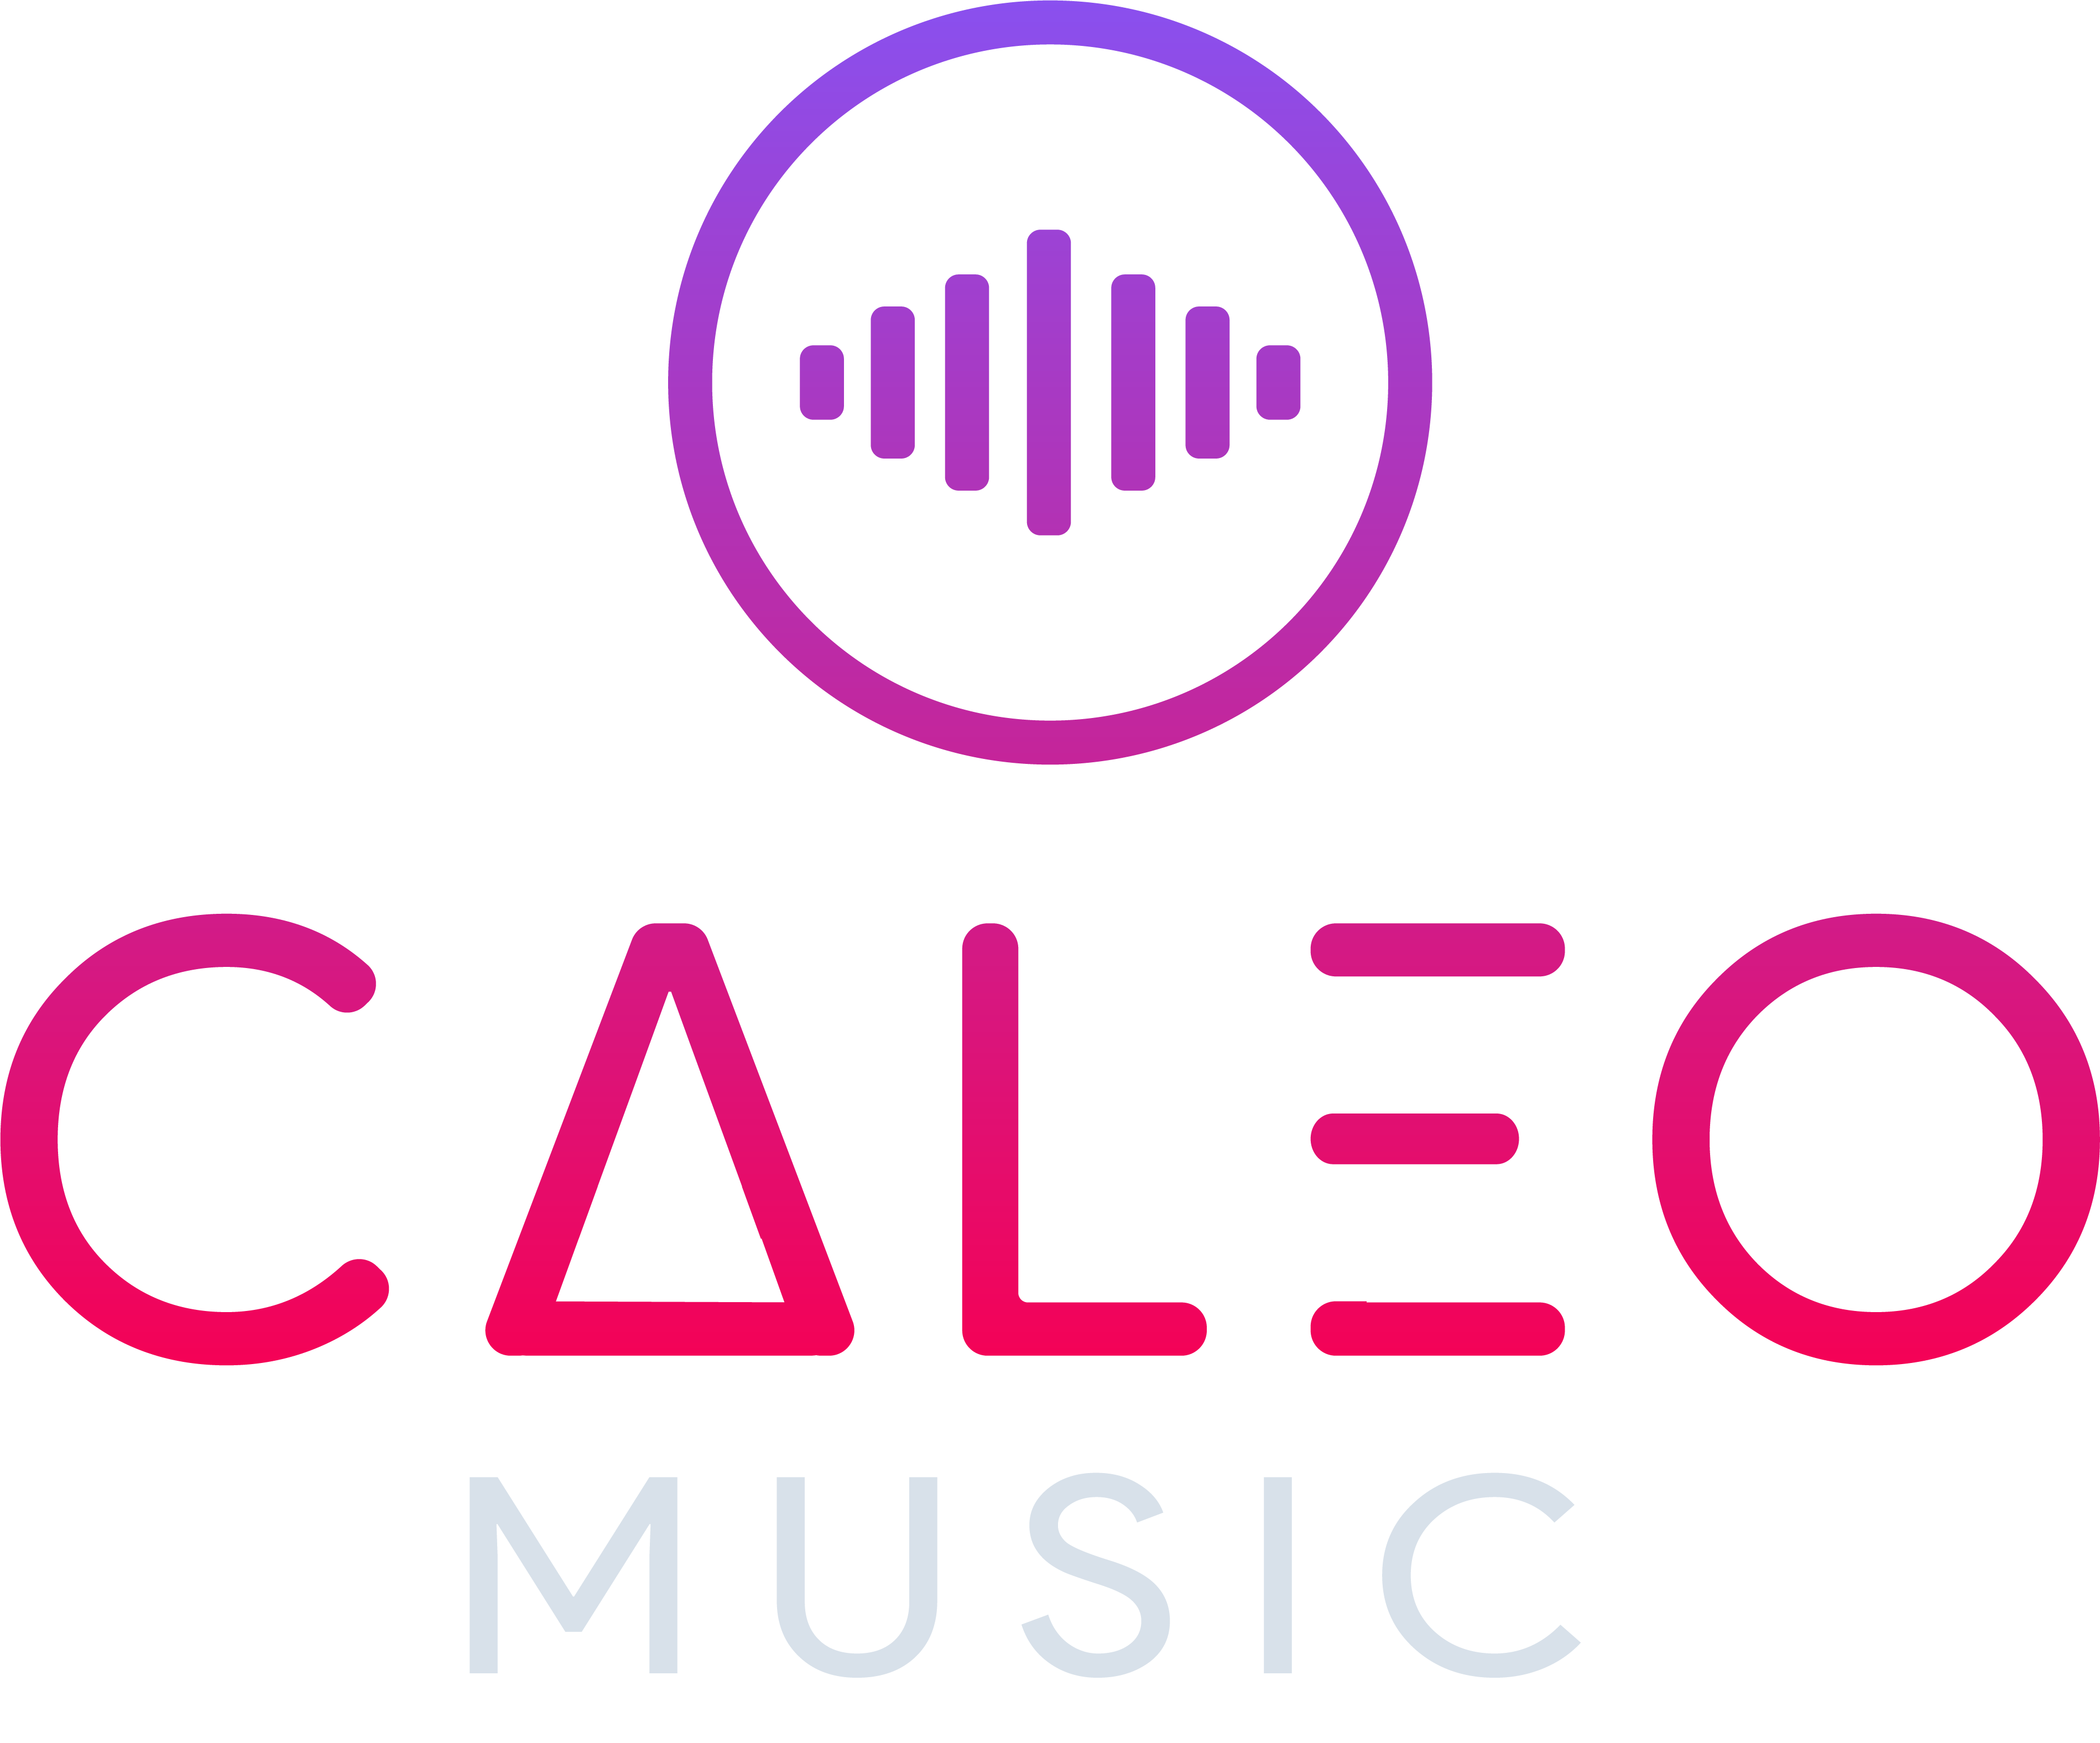 Caleo Music